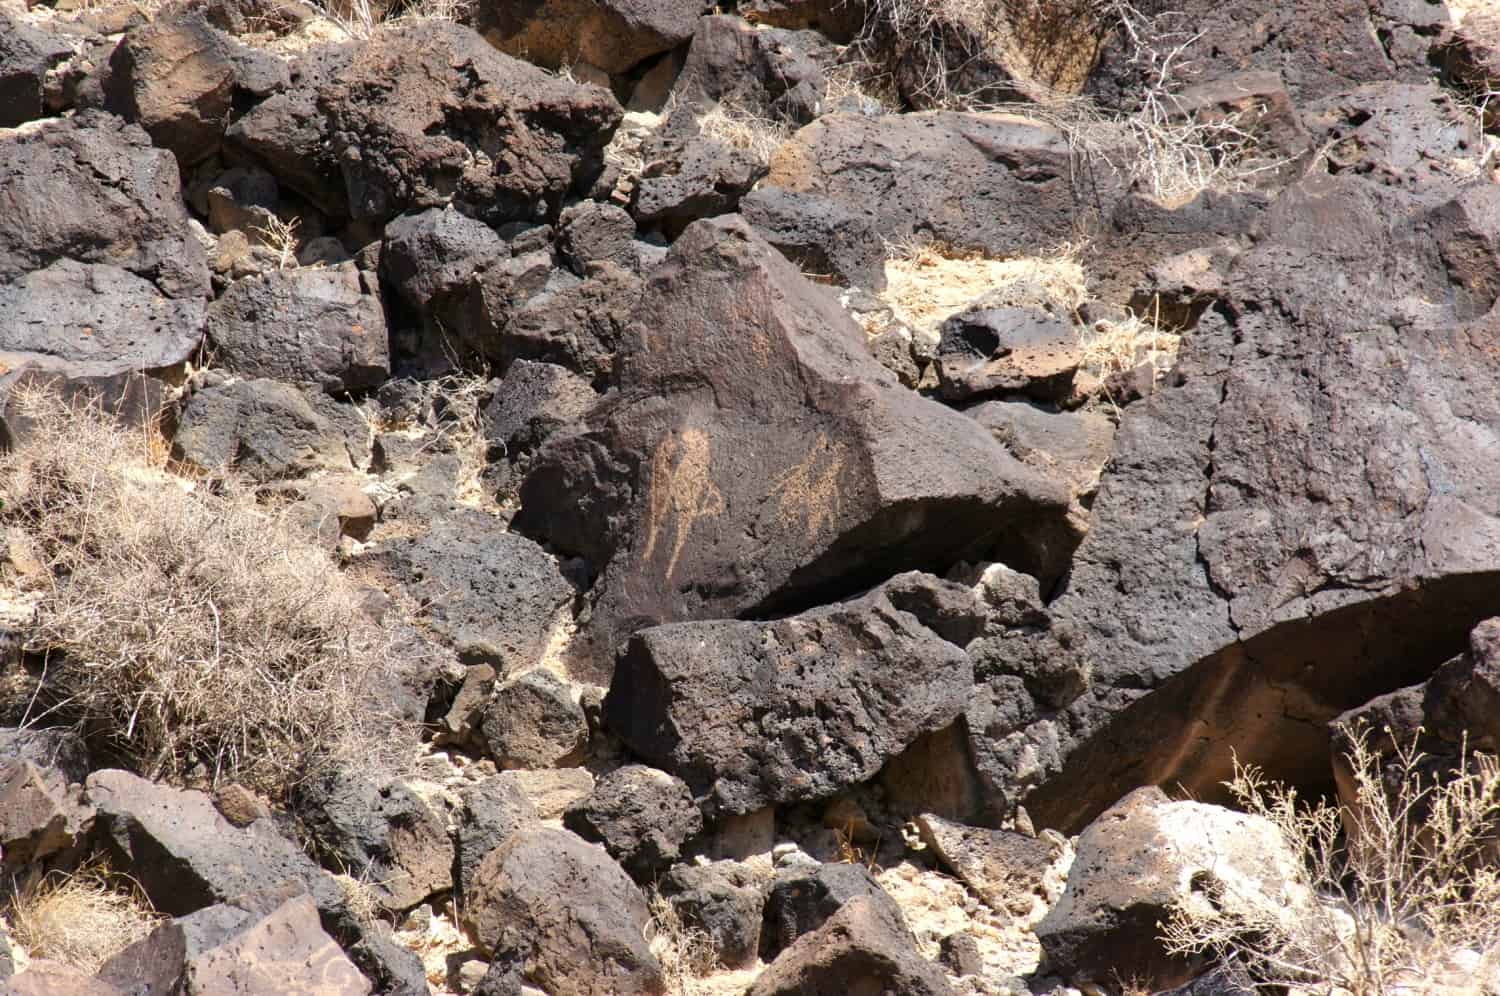 Petroglyph National Monument - Albuquerque, NM